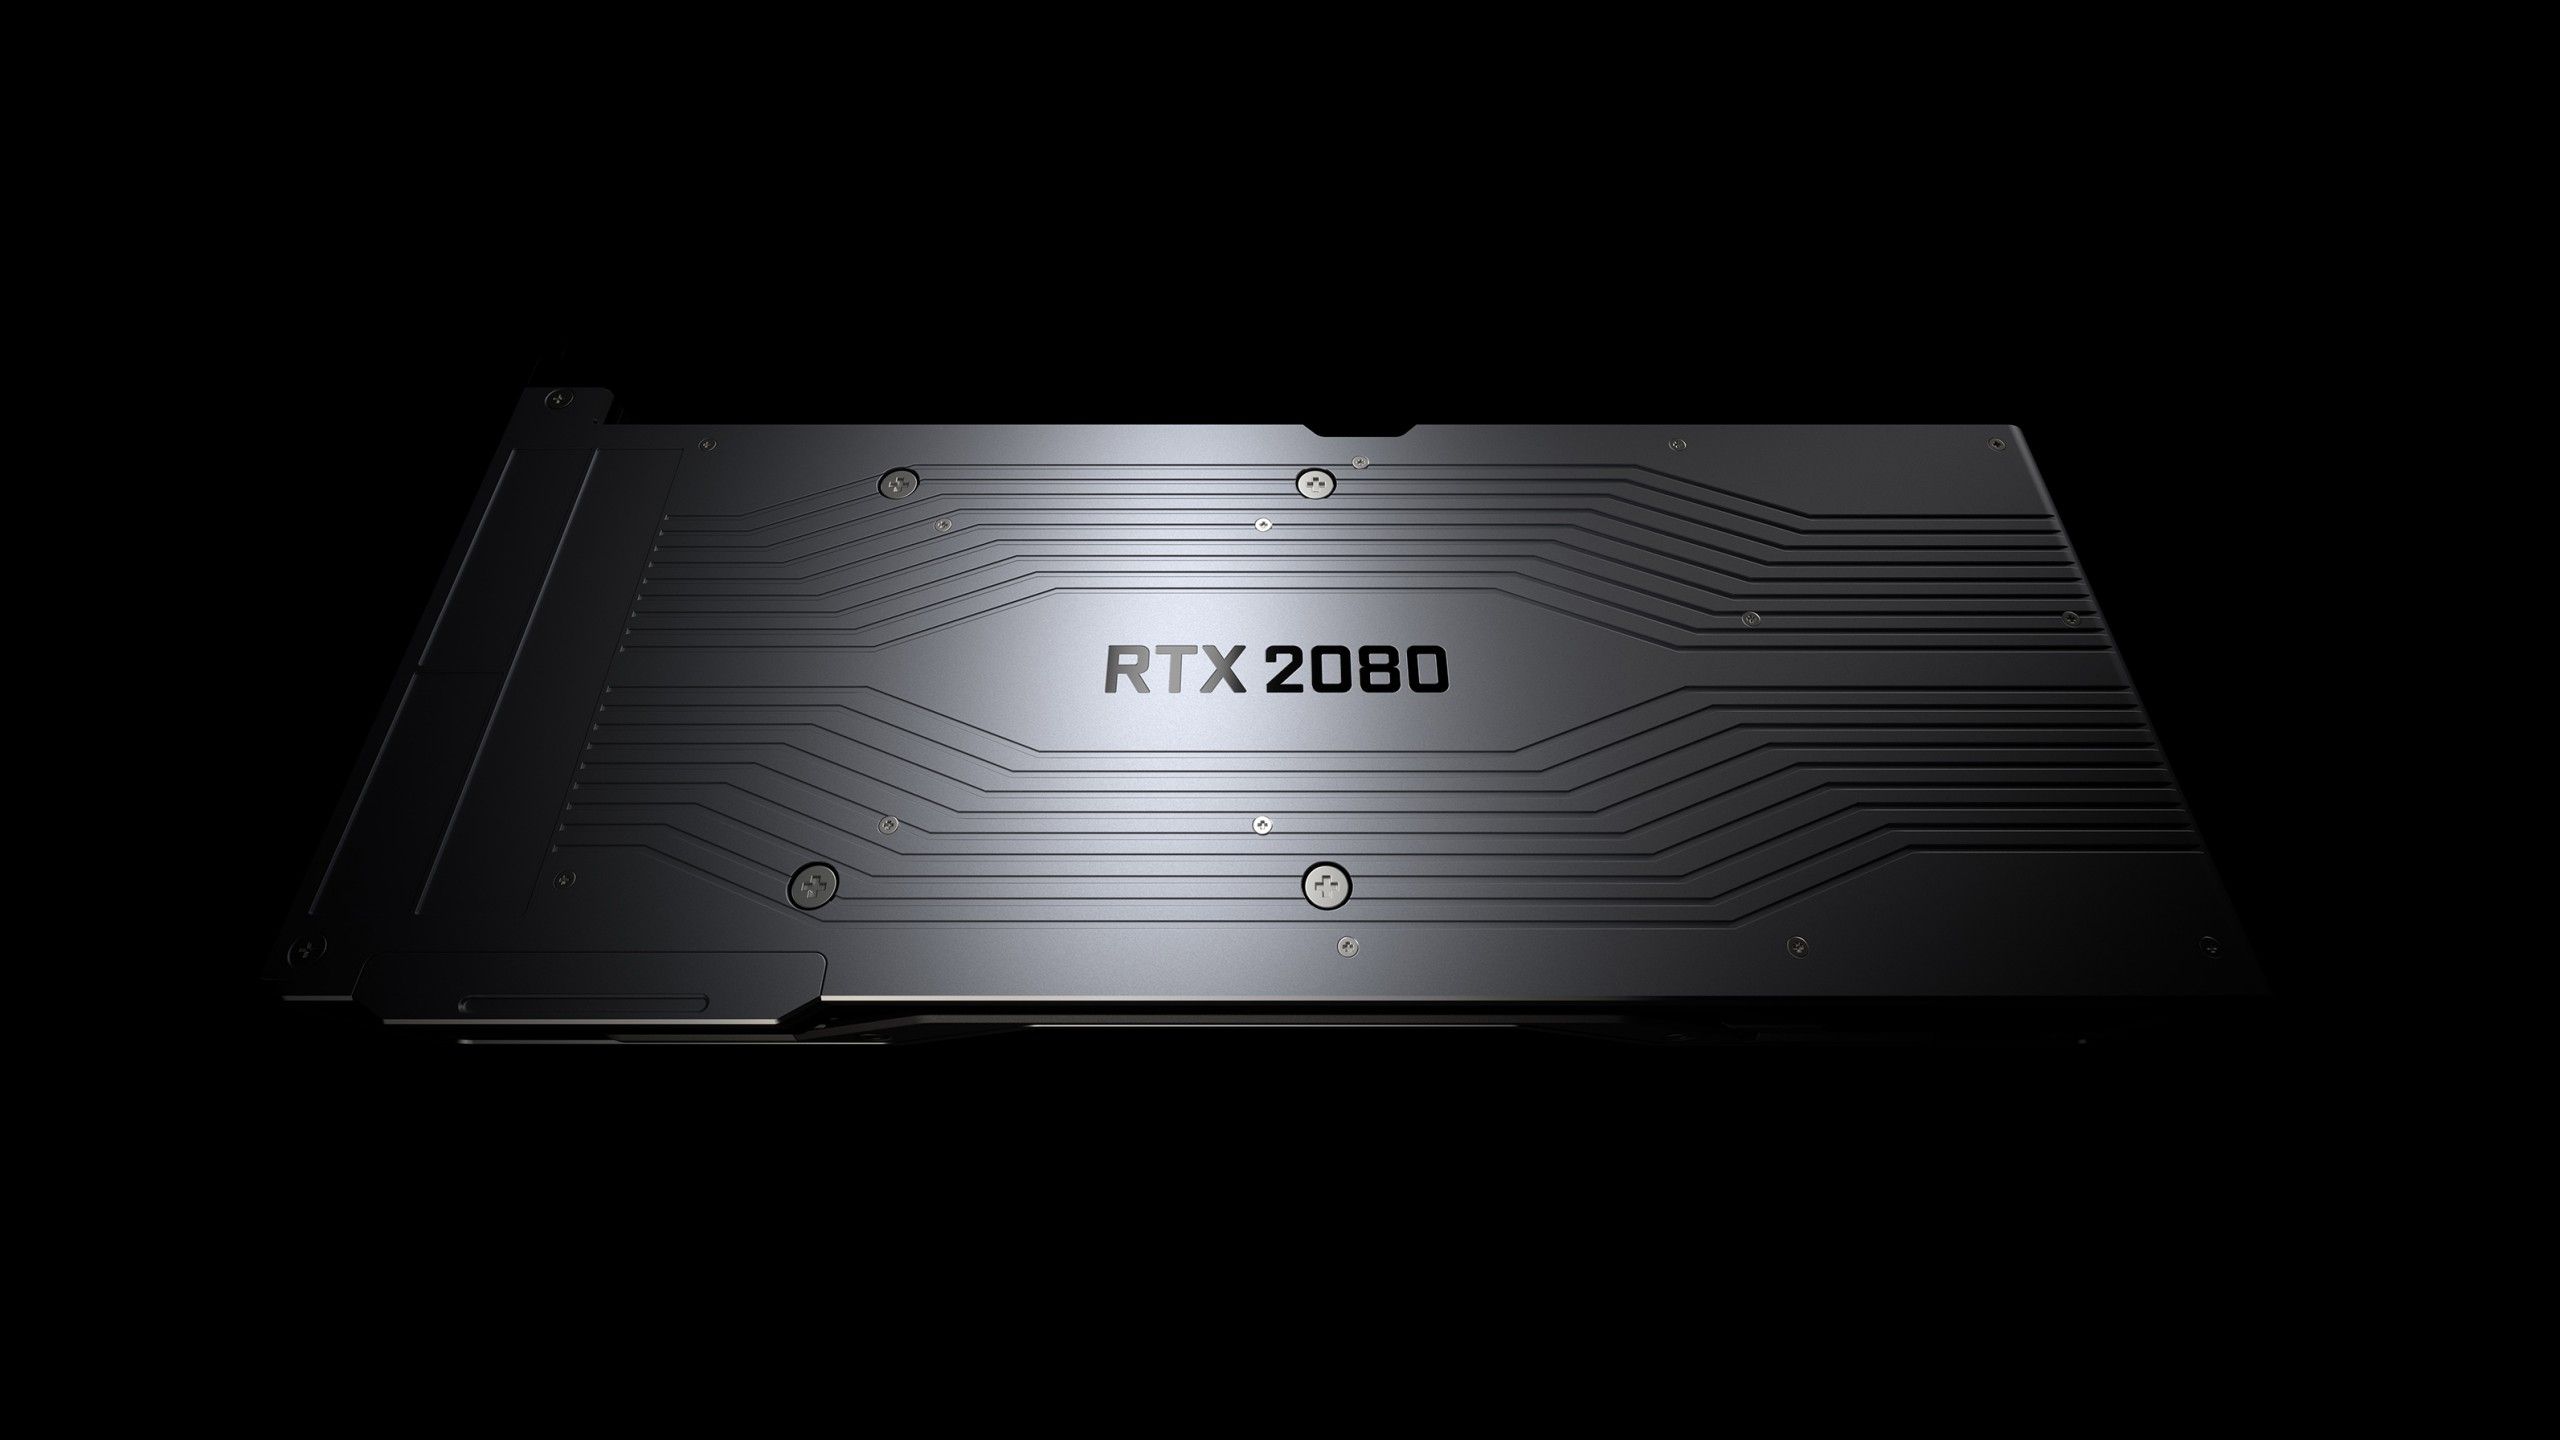 Wallpaper Nvidia GeForce RTX Graphics Card, 4K, Hi Tech